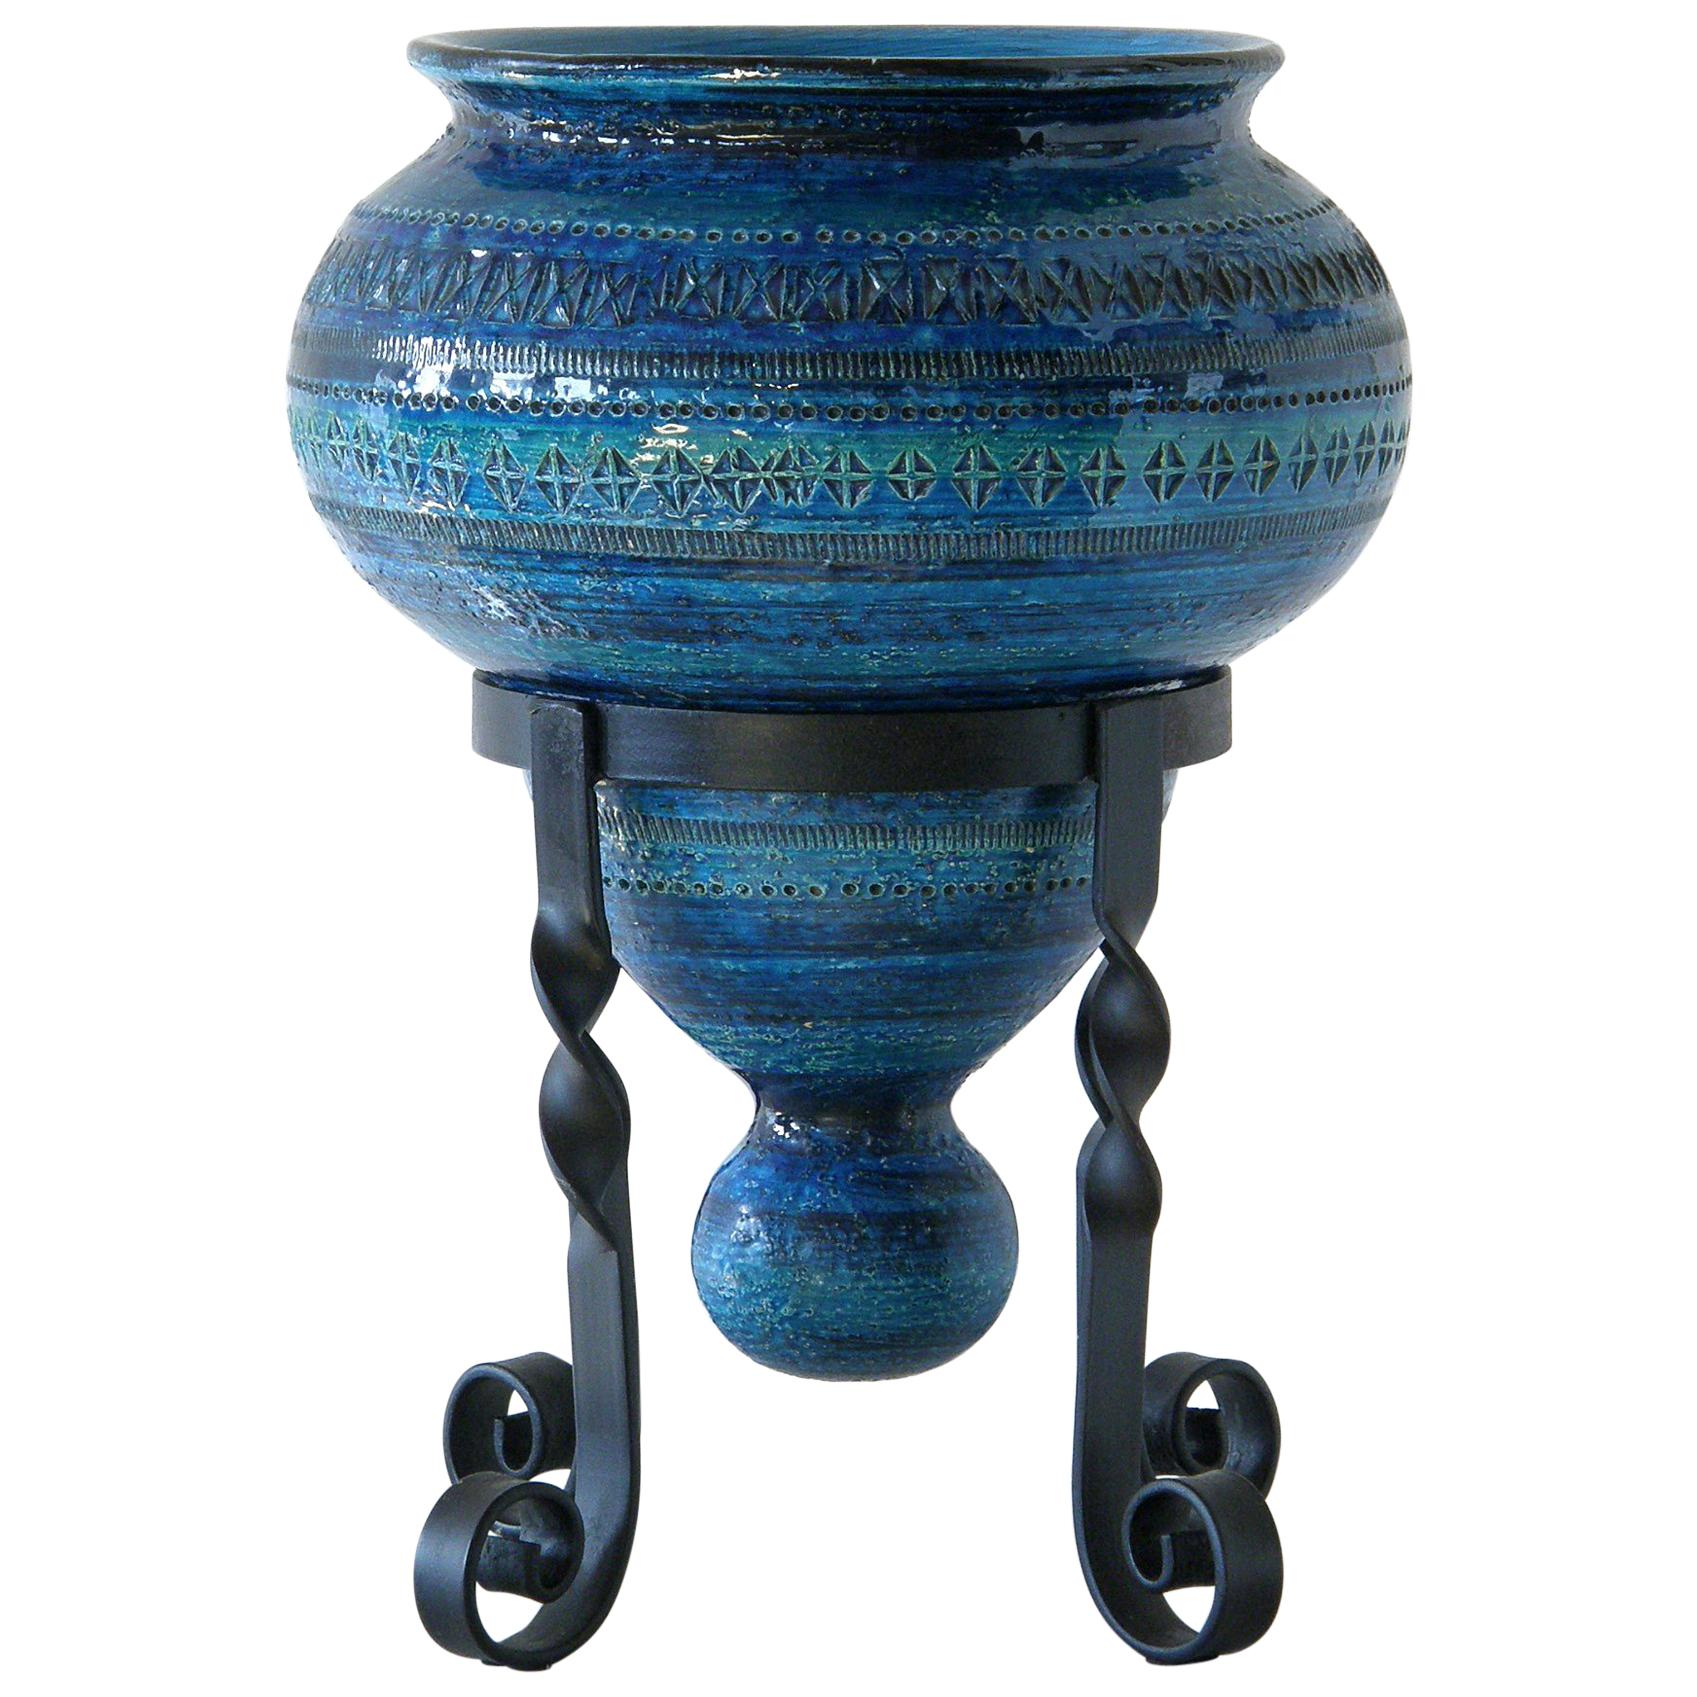 Aldo Londi for Bitossi "Rimini Blu" Ceramic Vase on Wrought Iron Stand